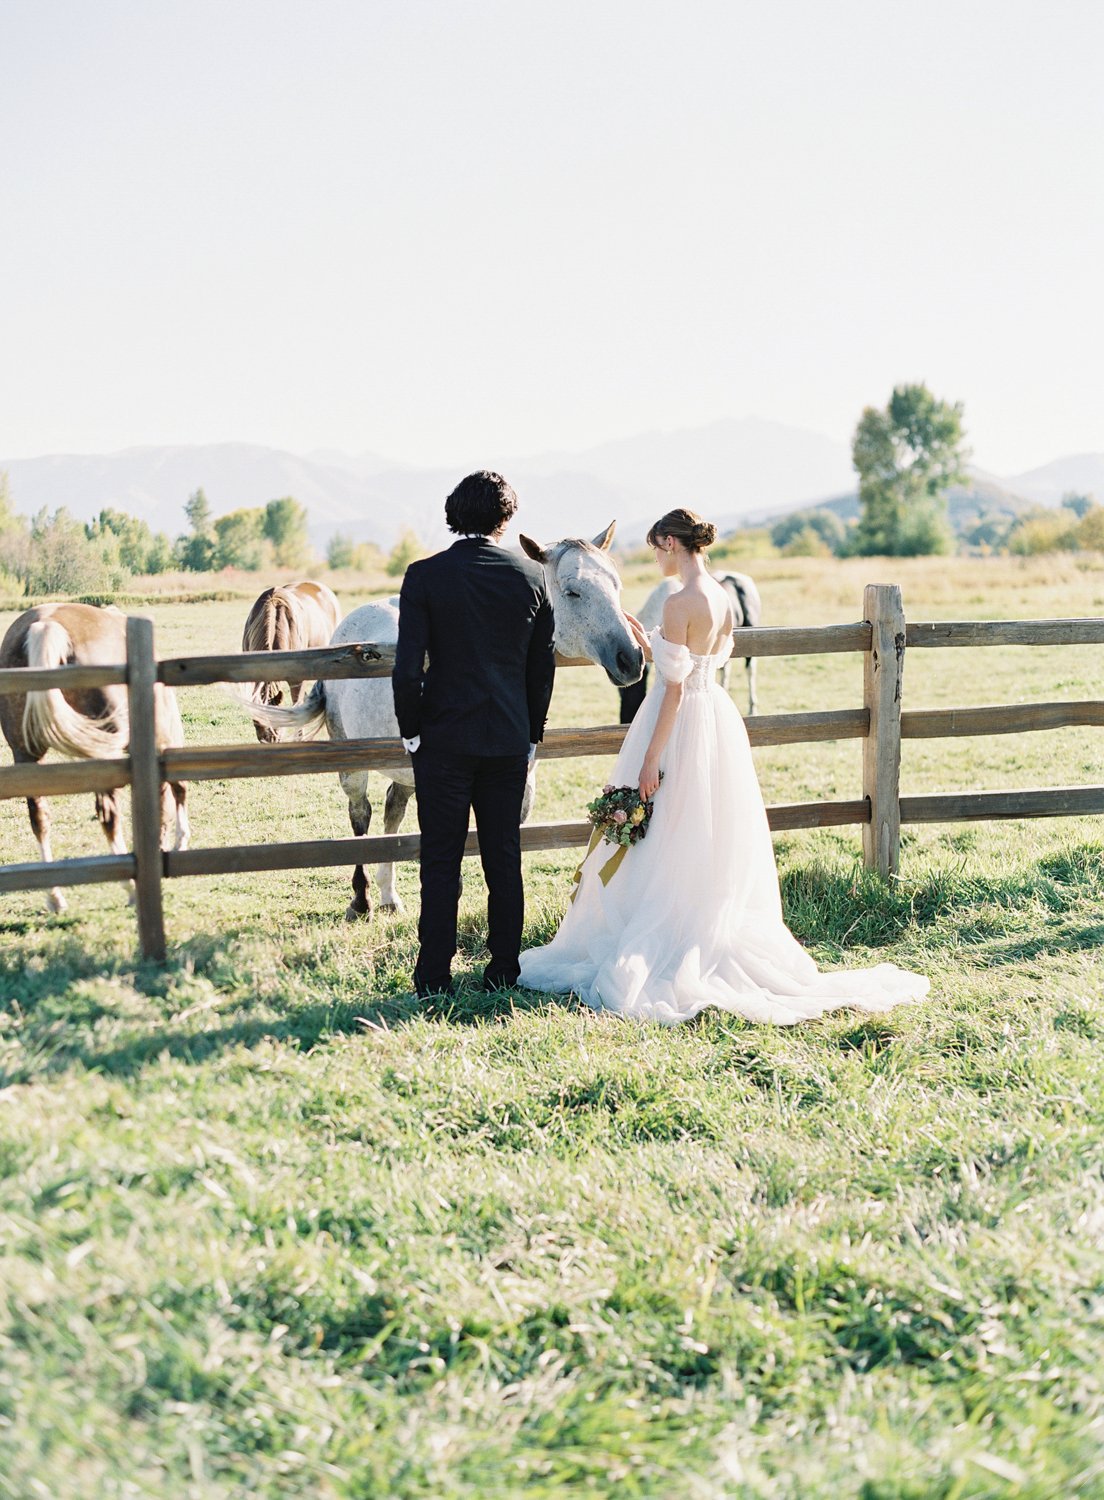 wisteria-photography.com | Wisteria Photography | Flower Filled Ranch Wedding | Utah | Featured on Wedding Sparrow | Destination Photographer-4.jpg